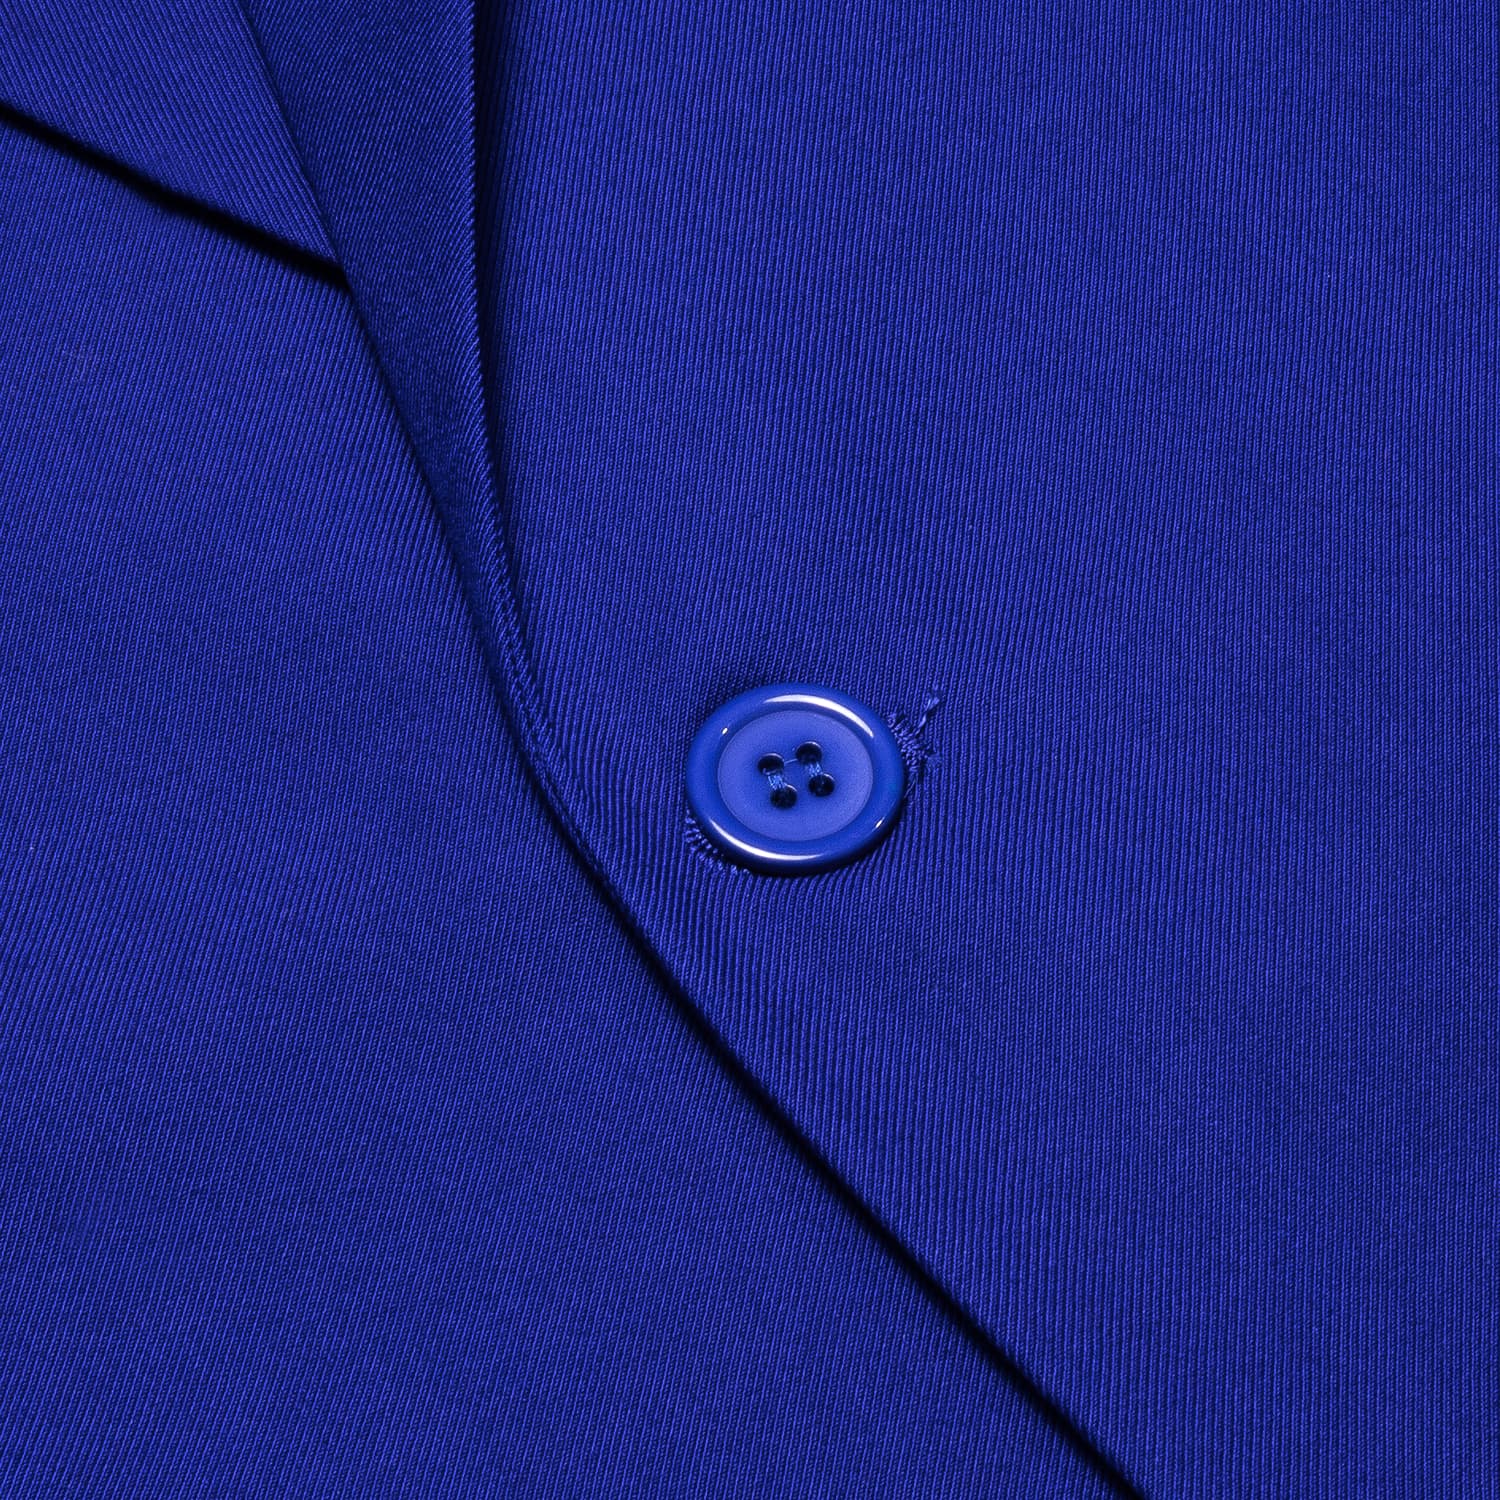 Blazer Royal Blue Men's Wedding Business Solid Top Men Suit